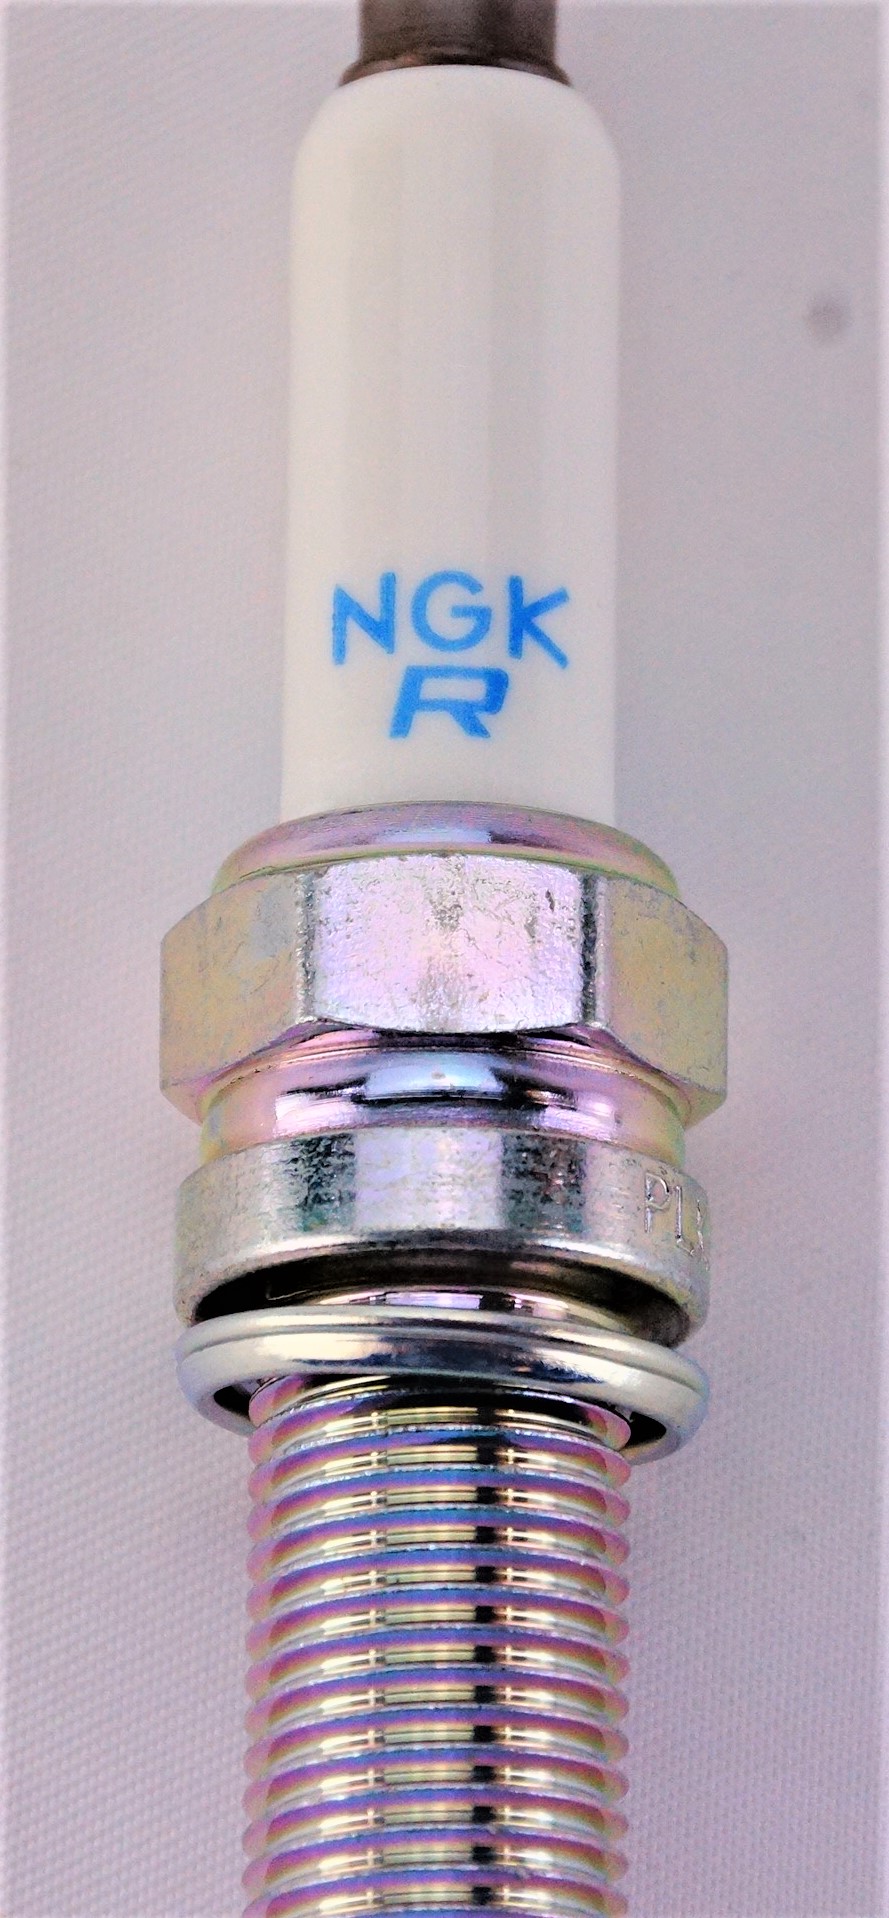 Set of 8 NGK 4288 PLKR7A Premium Laser Platinum Spark Plugs Fast Free Shipping - image 5